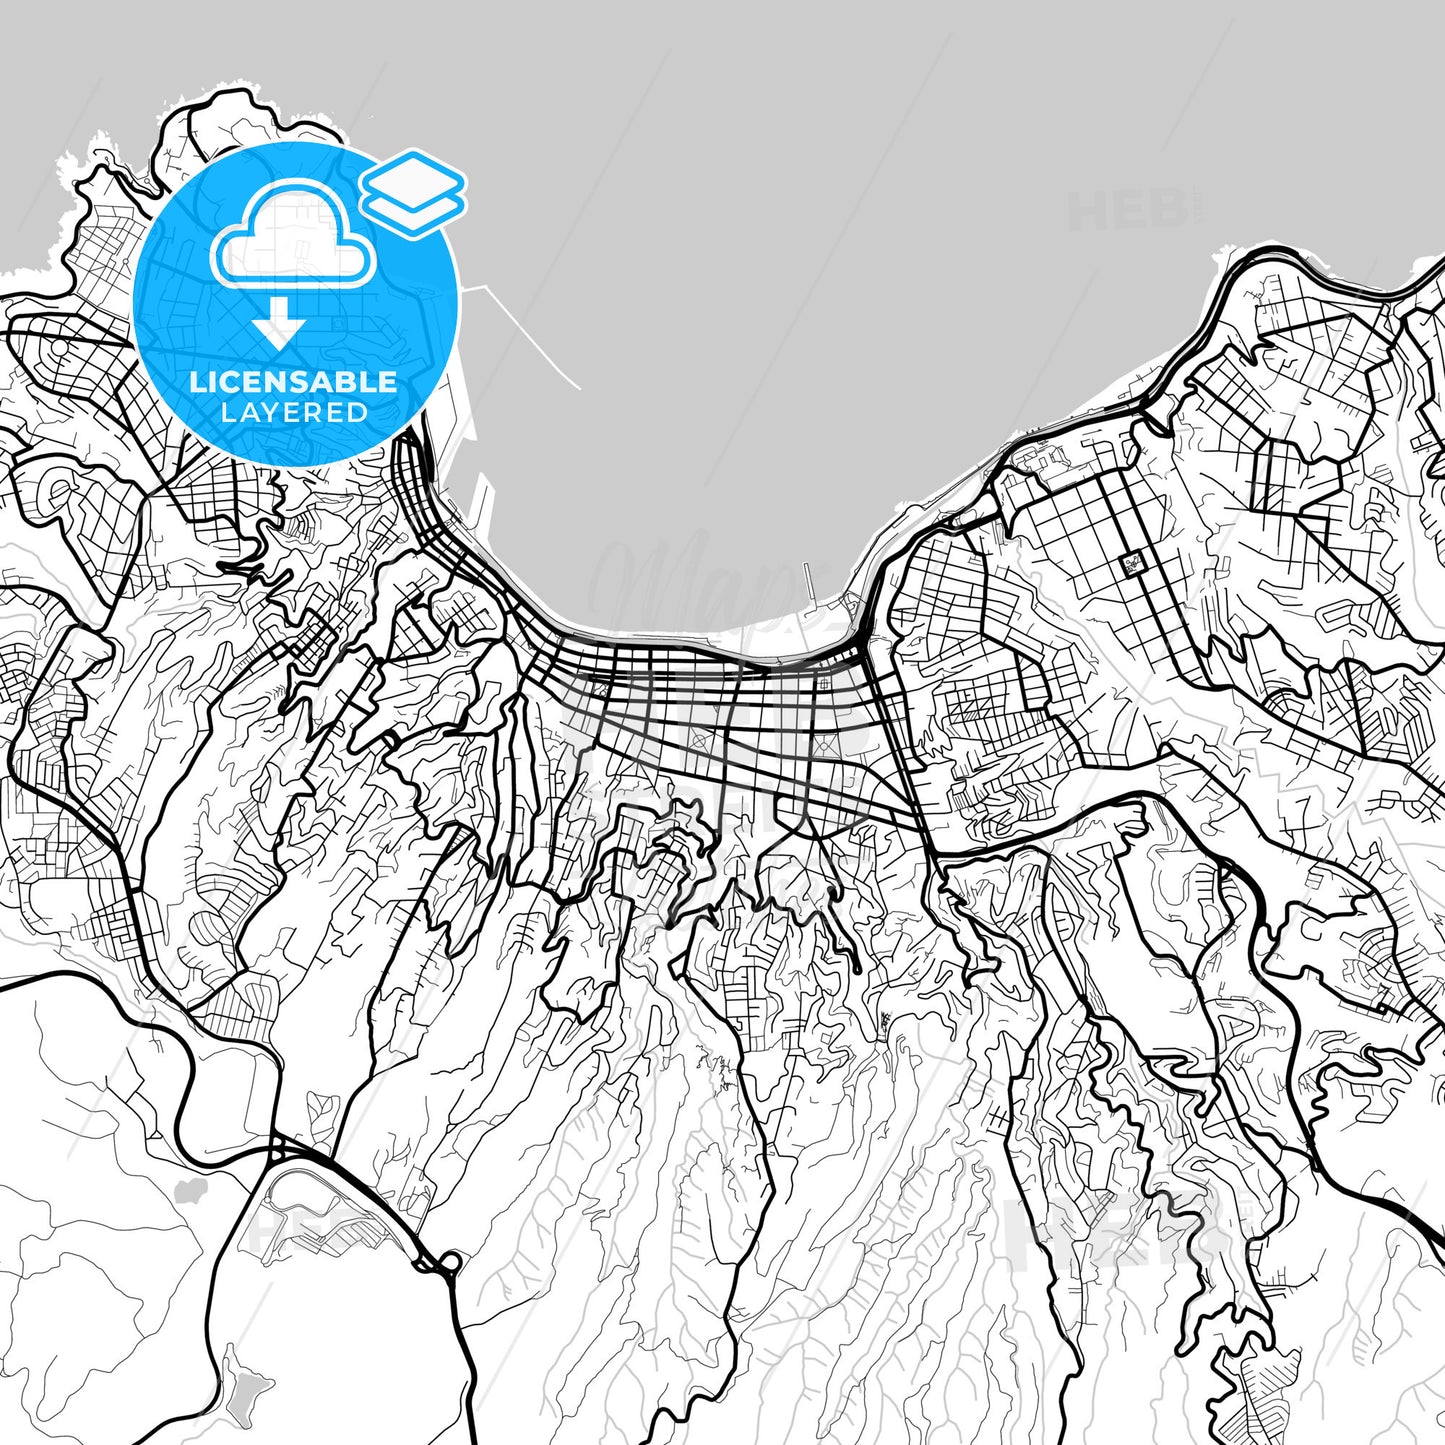 Layered PDF map of Valparaiso, Chile